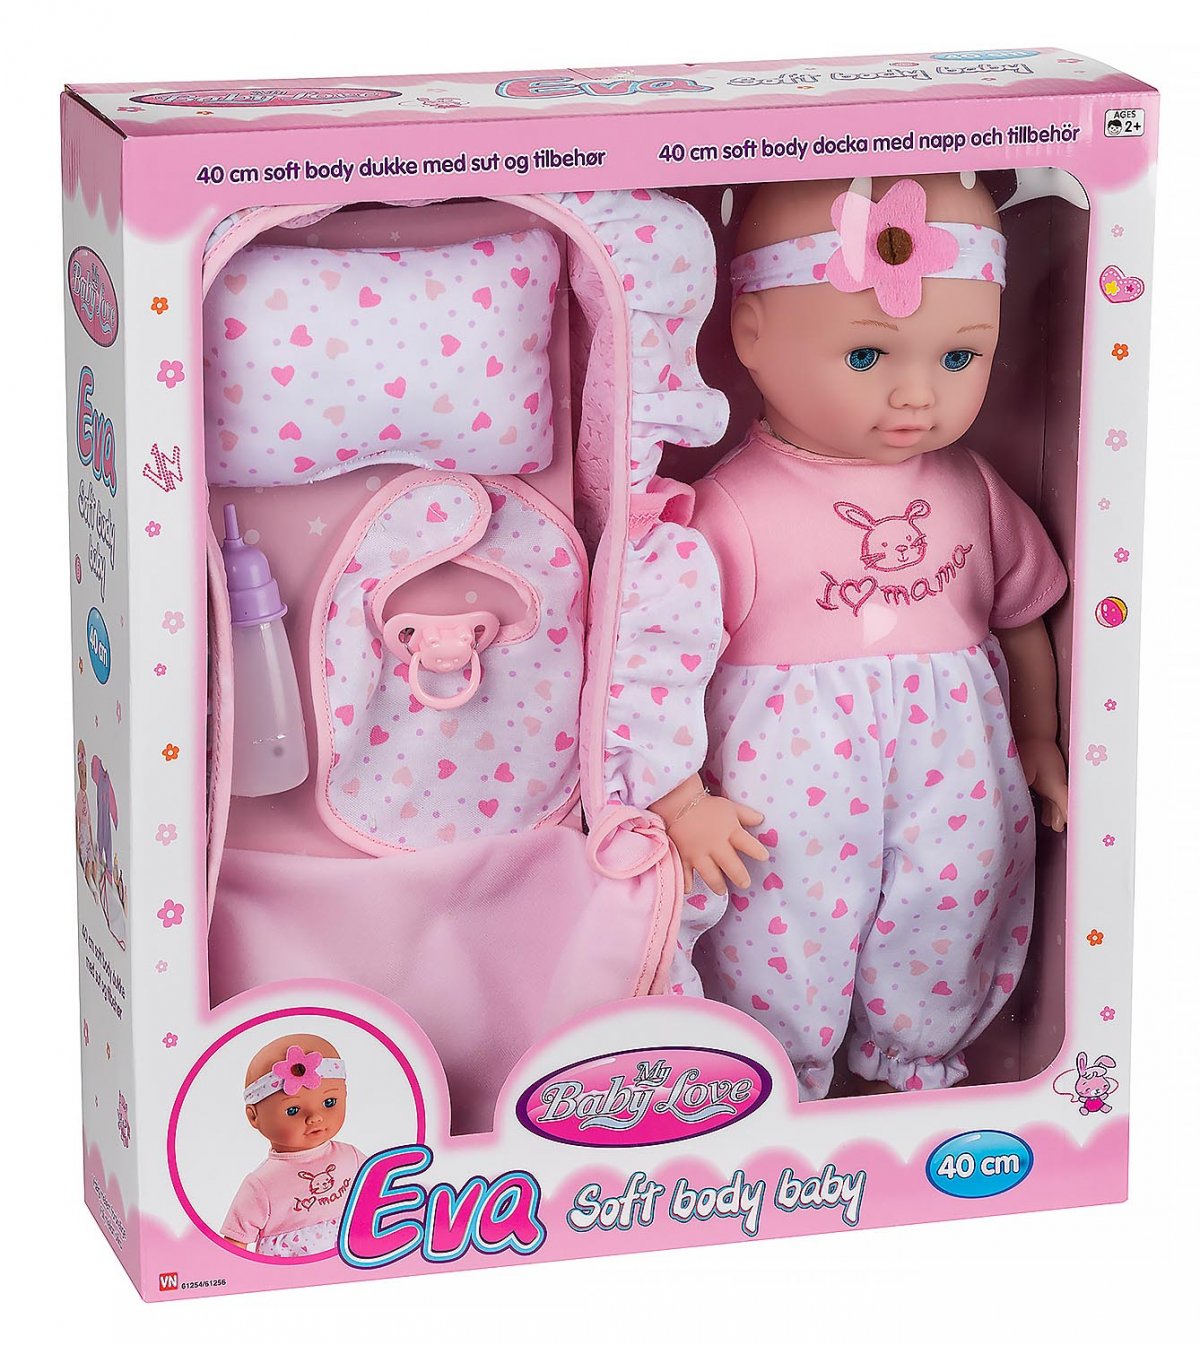 My Baby Love Deluxe dukkesæt med Inkl. 40 cm og tilbehør. - Dukketilbehør - Tulle's legetøj